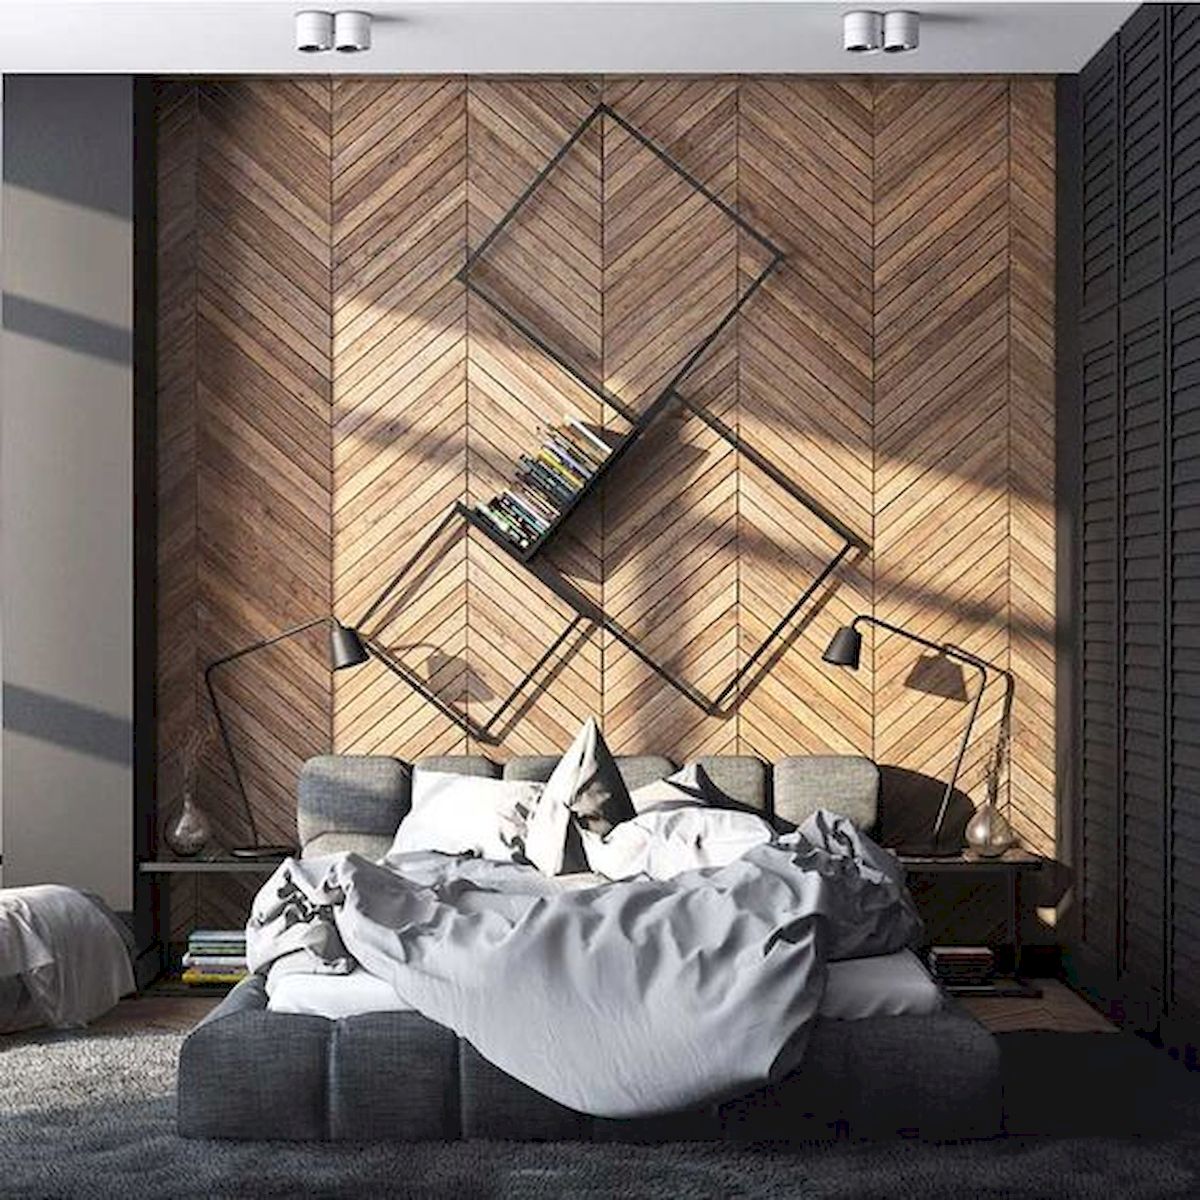 36 Beautiful Wall Bedroom Decor Ideas That Unique (9)